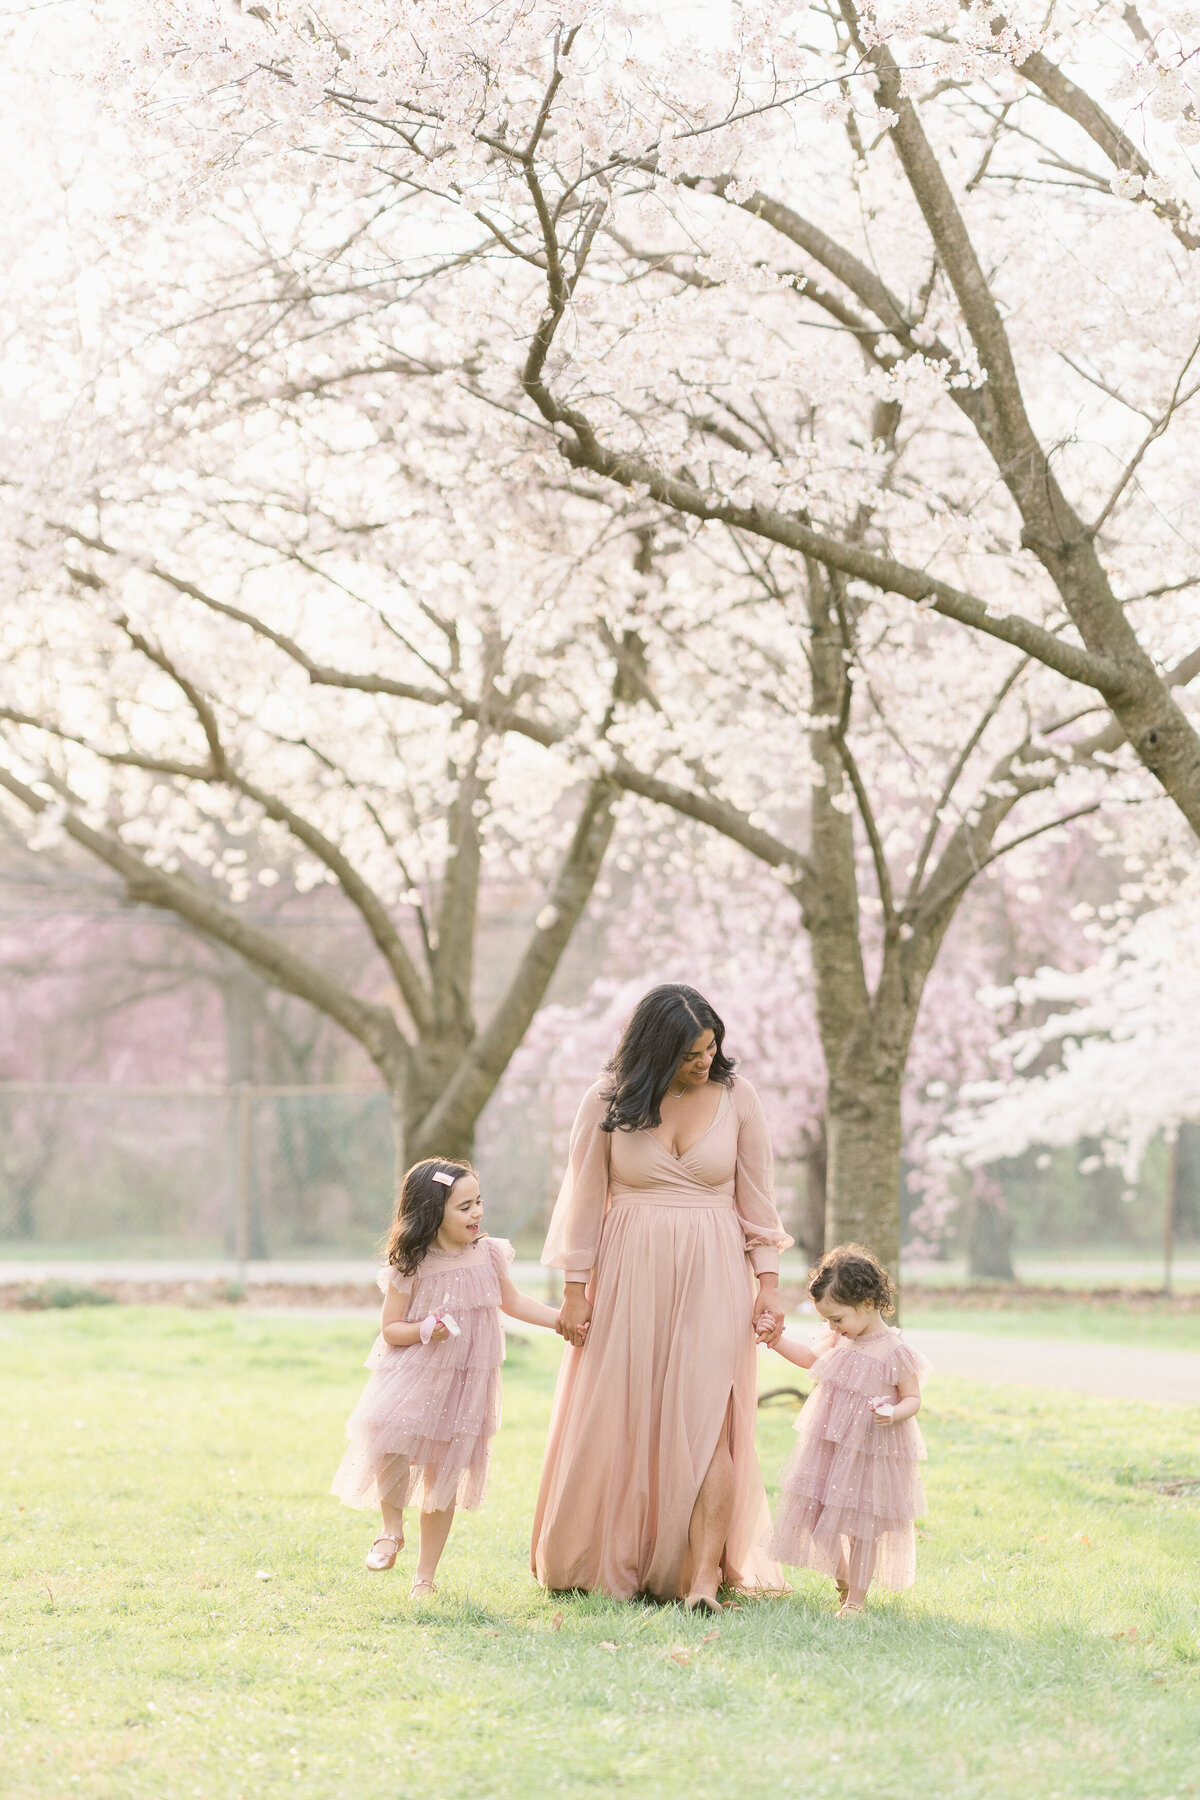 Courtney-Landrum-Photography-Motherhood-Cherry-Blossoms-5